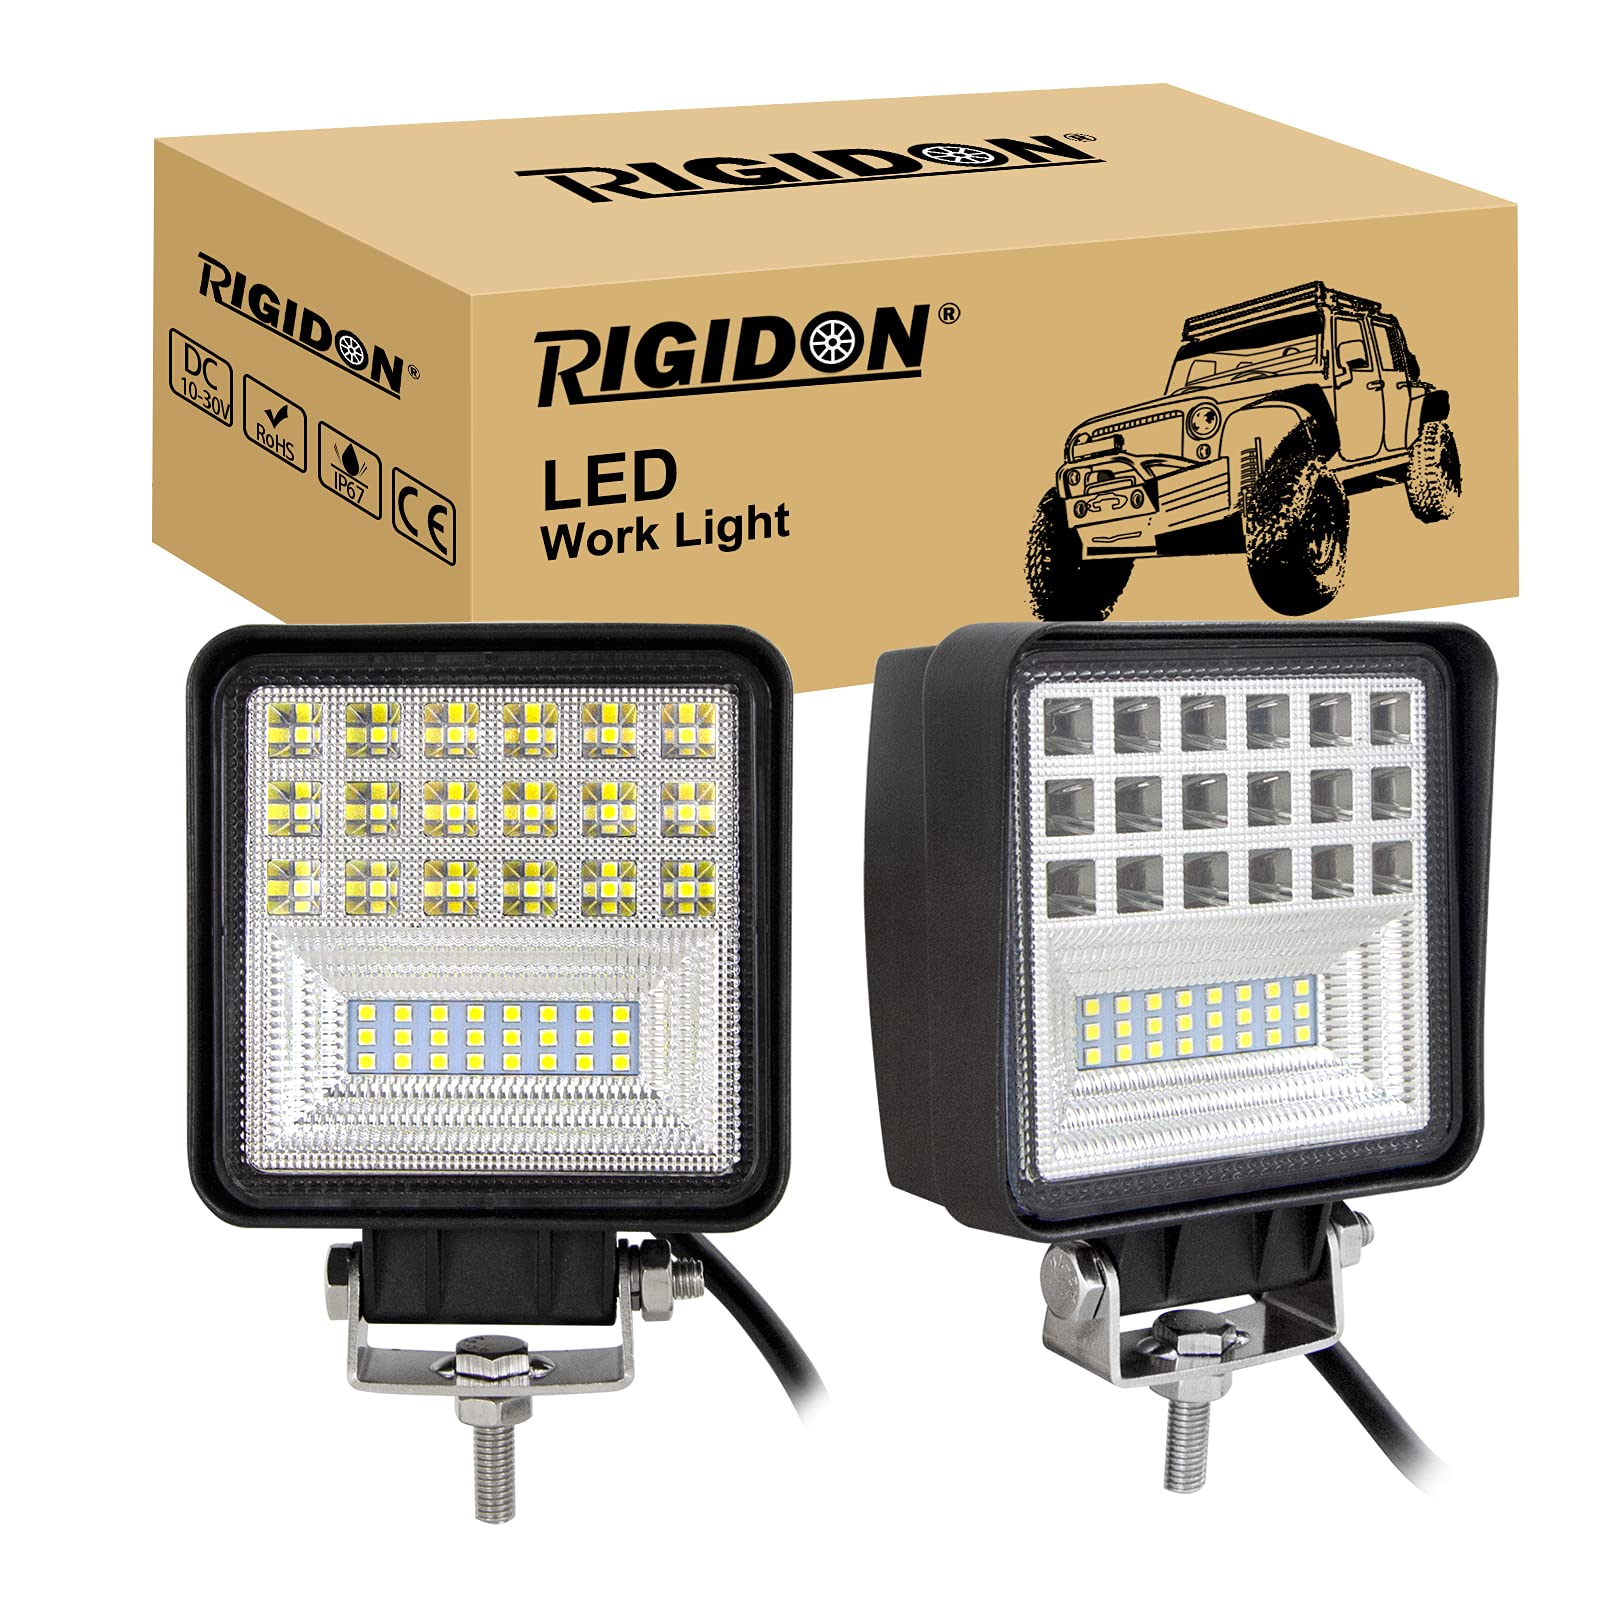 RIGIDON 2 Pcs Auto quad scheinwerfer, 4 Zoll 10cm 126W Spot Flood Combo offroad beleuchtung für SUV ATV, Traktor, LKW, 4x4, 6000K led nebelscheinwerfer, led arbeitsscheinwerfer, led arbeitslicht von RIGIDON